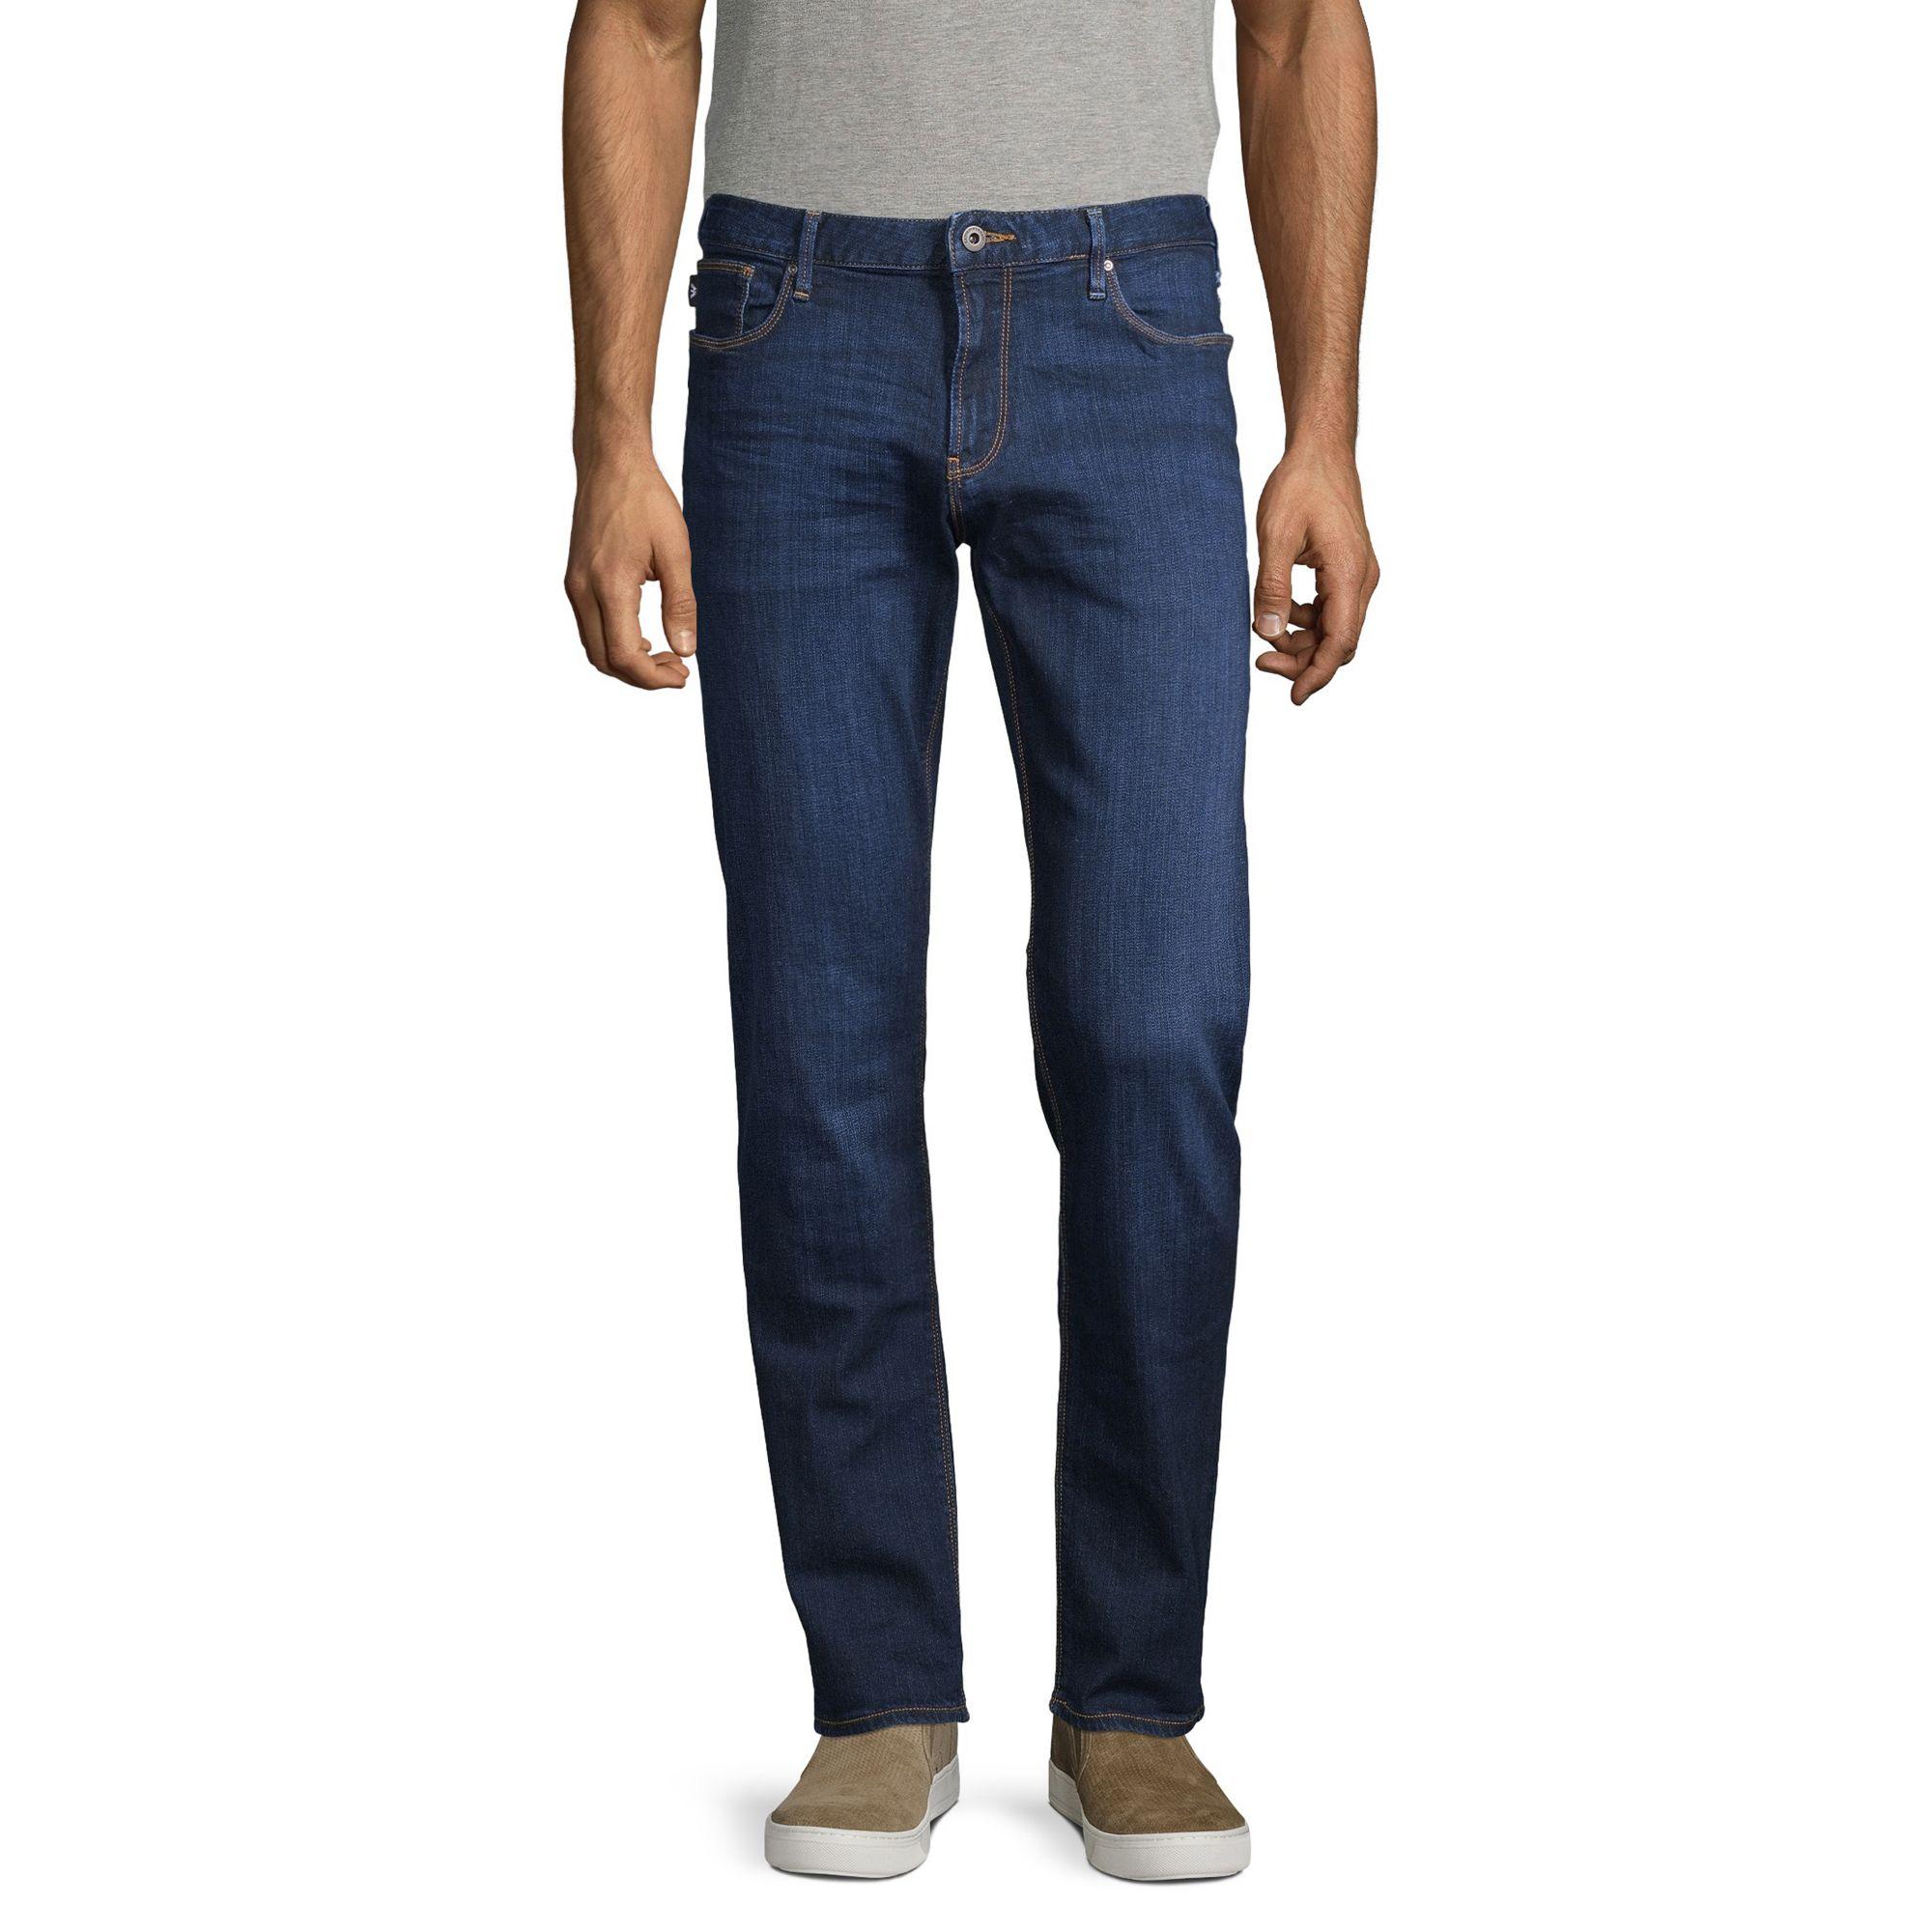 Emporio Armani Denim Slim-fit Jeans in Denim Blue (Blue) for Men - Lyst